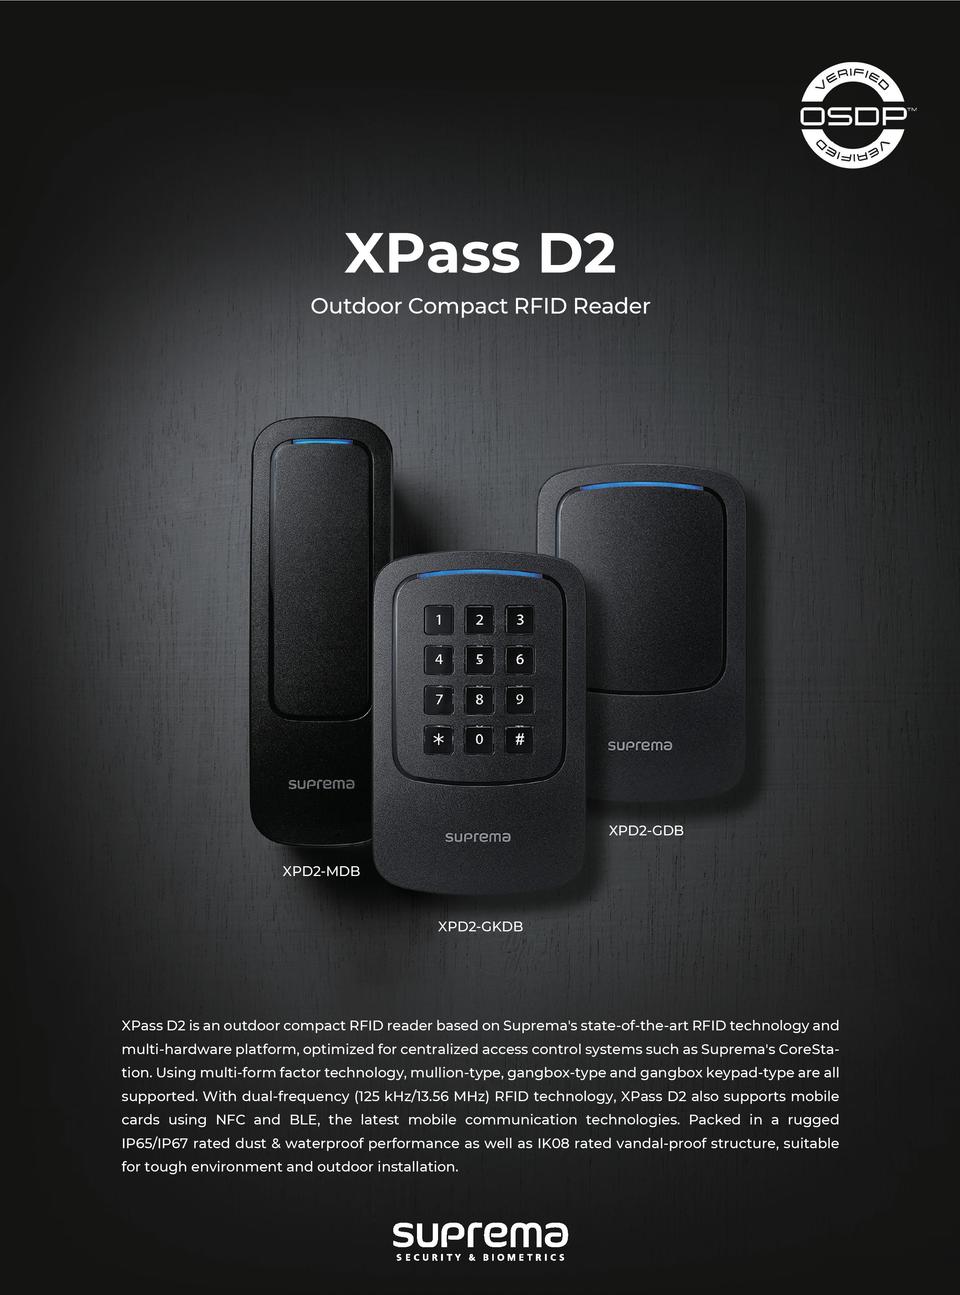 Suprema XPD2-GKDPB XPass D2 Keypad with RF Card Reader Dual RFID NFC BLE 0